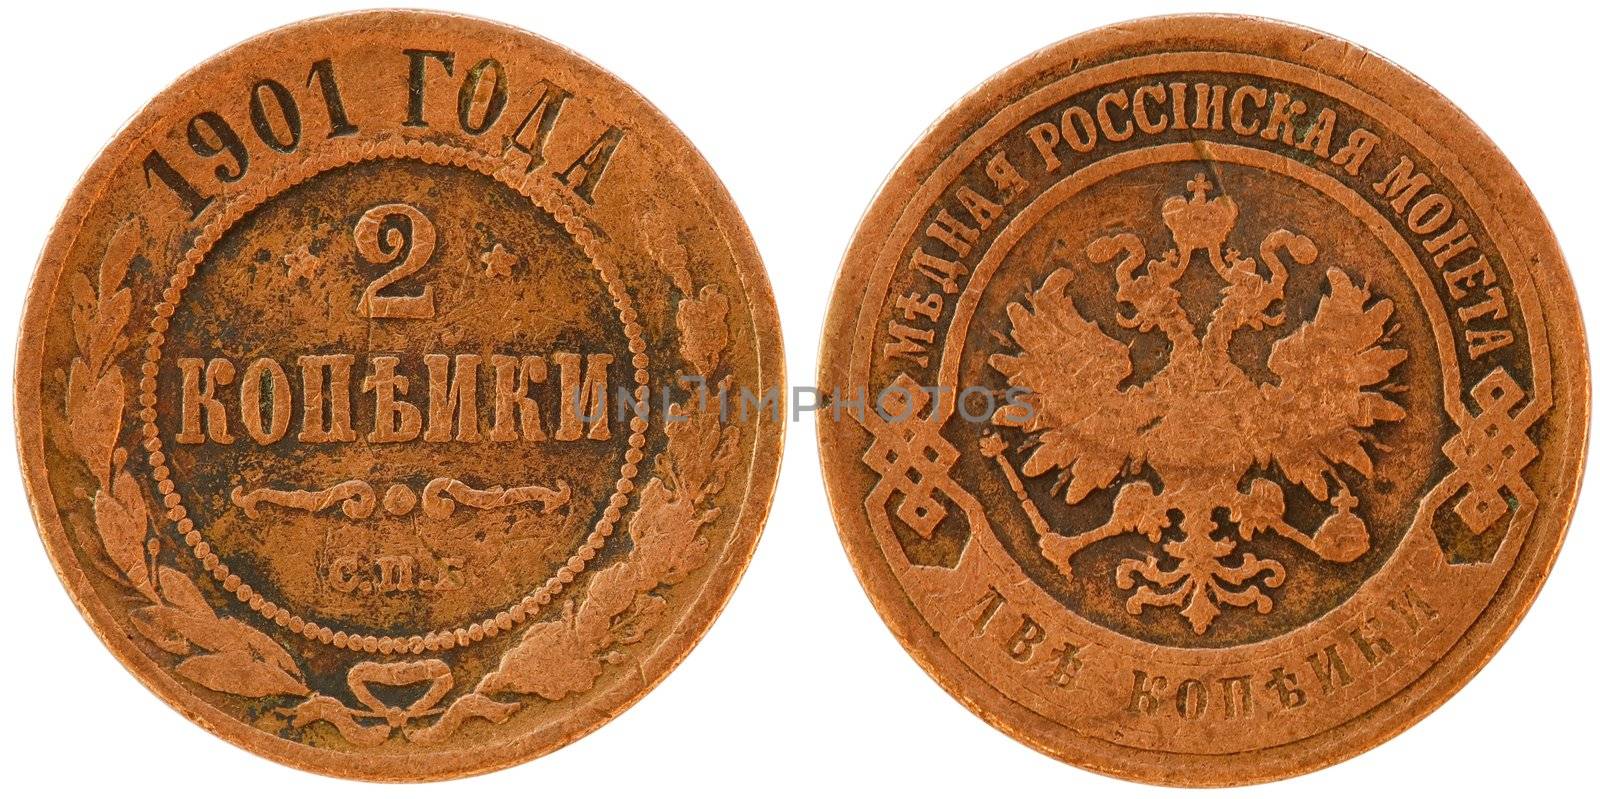 Russian coin - 2 copecks by pzaxe